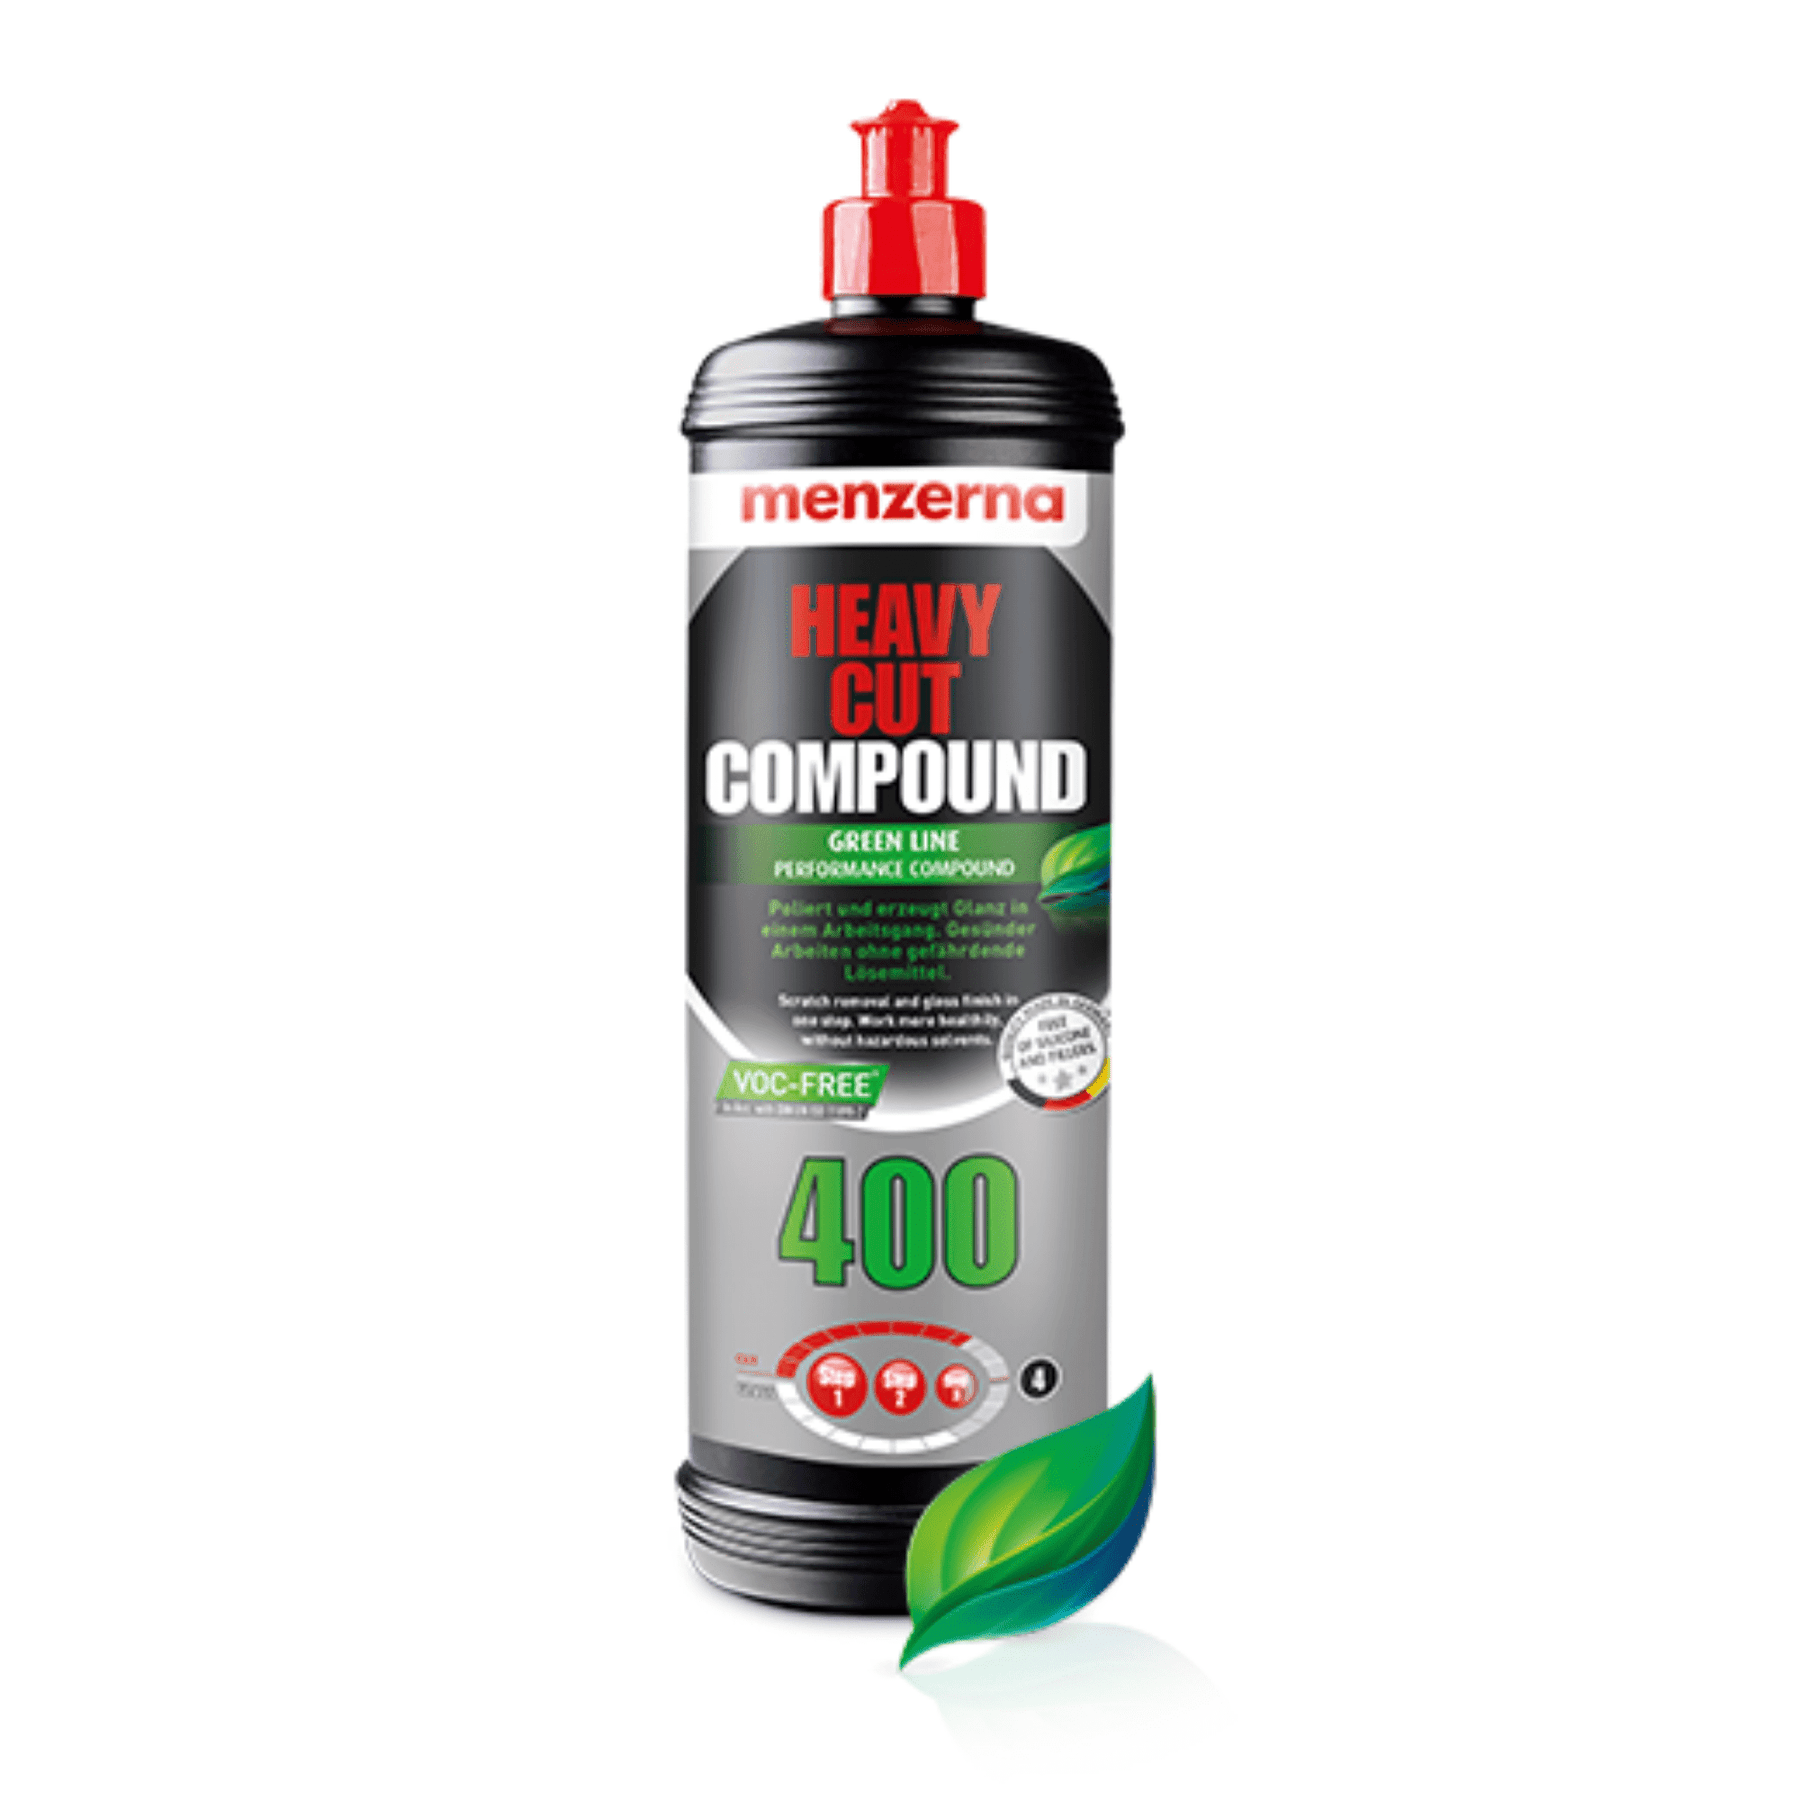 Menzerna Heavy Cut Polishing Compound 400 Green Line - Environmentally Friendly 8oz